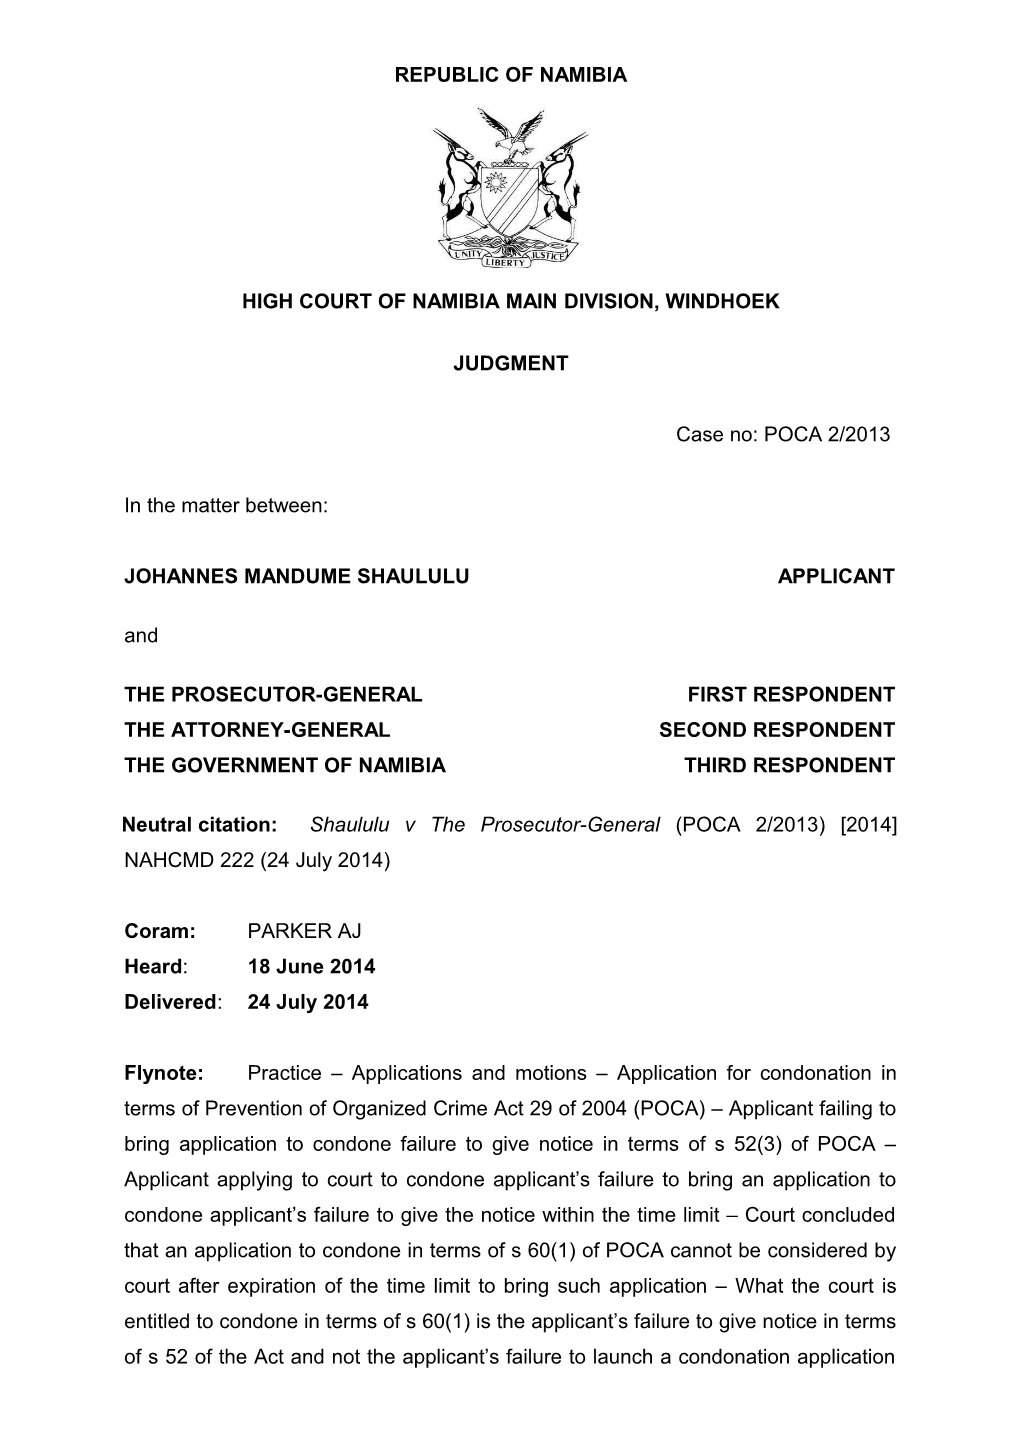 Shaululu V the Prosecutor-General (POCA 2-2013) 2014 NAHCMD 222 (24 July 2014)